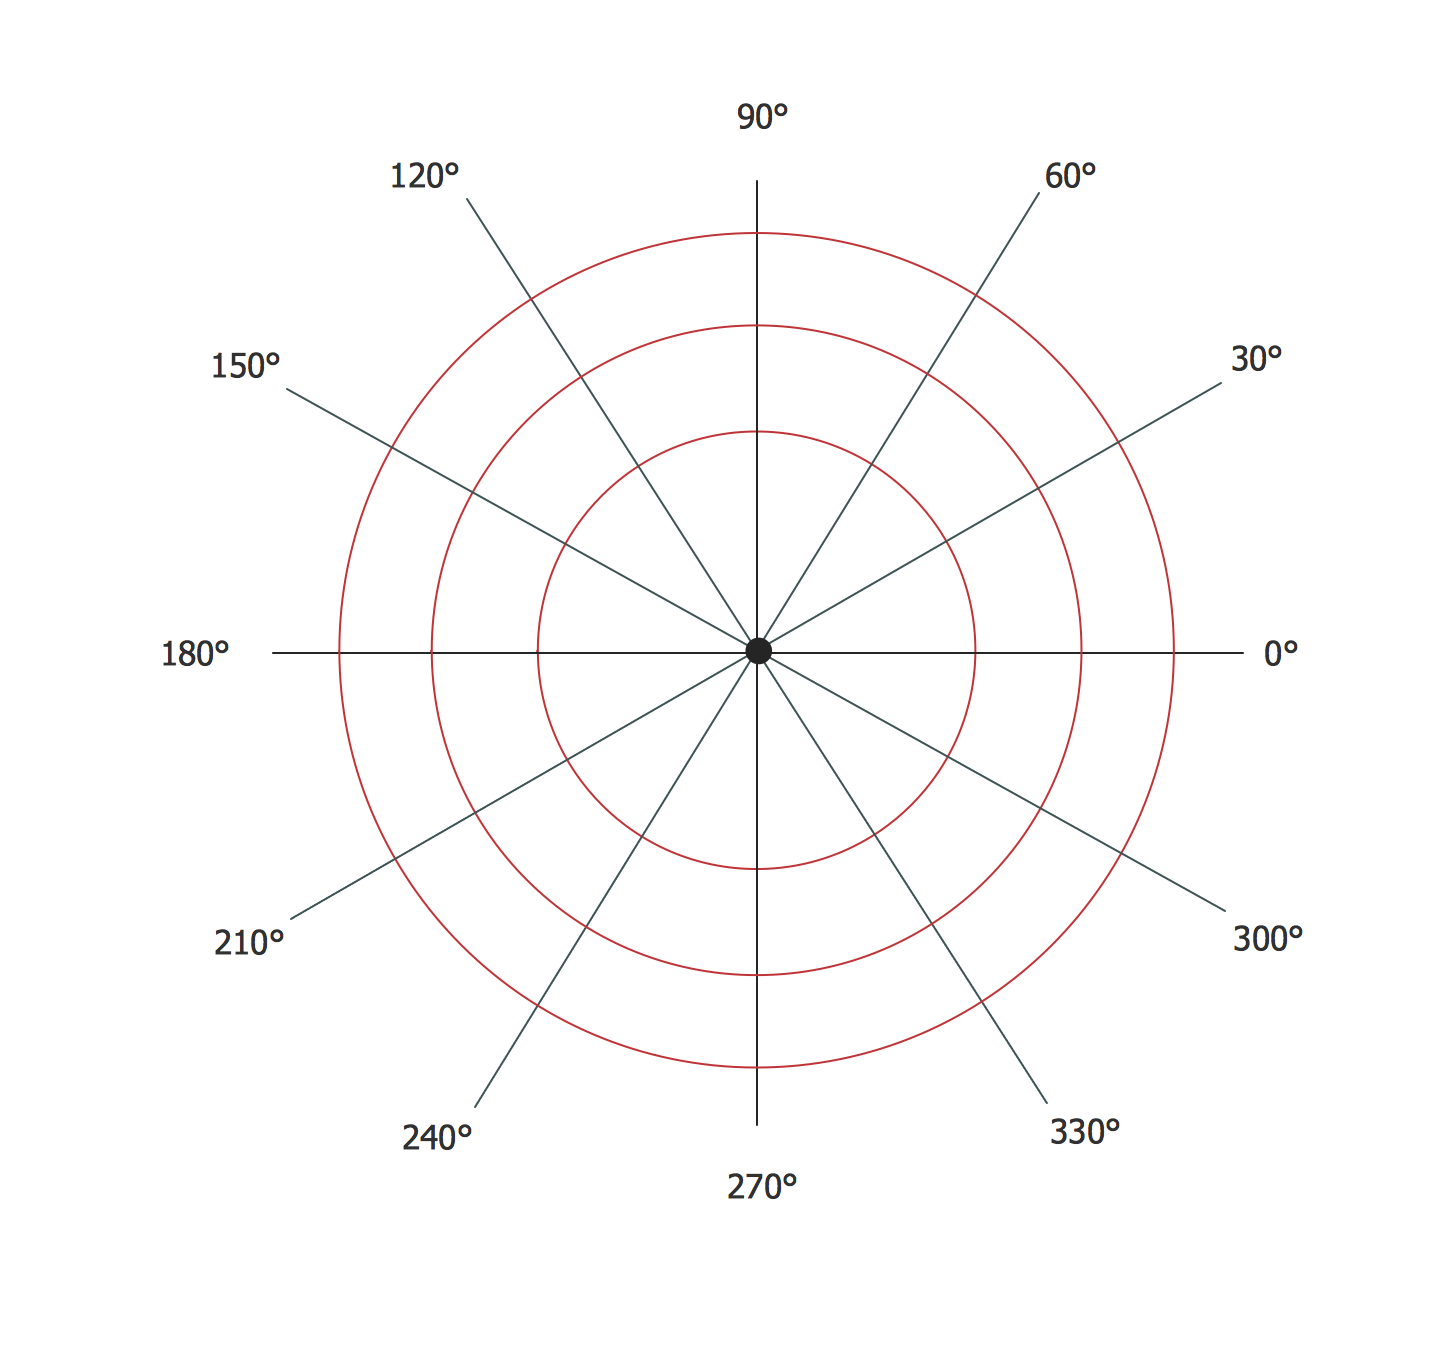 polar coordinates graph radians and degrees